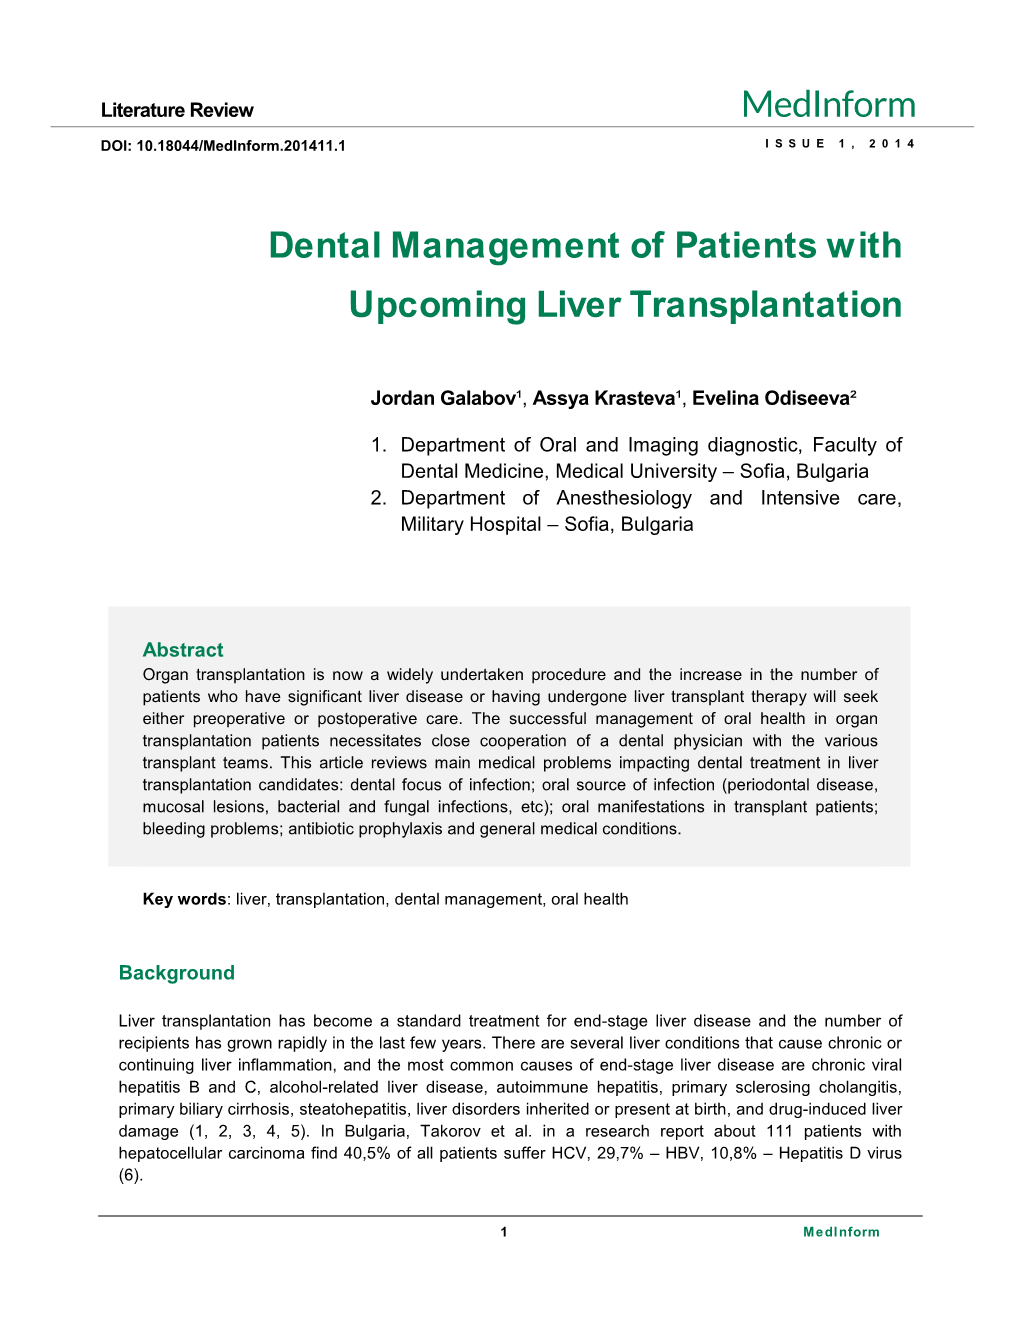 Dental Management of Patients with Upcoming Liver Transplantation